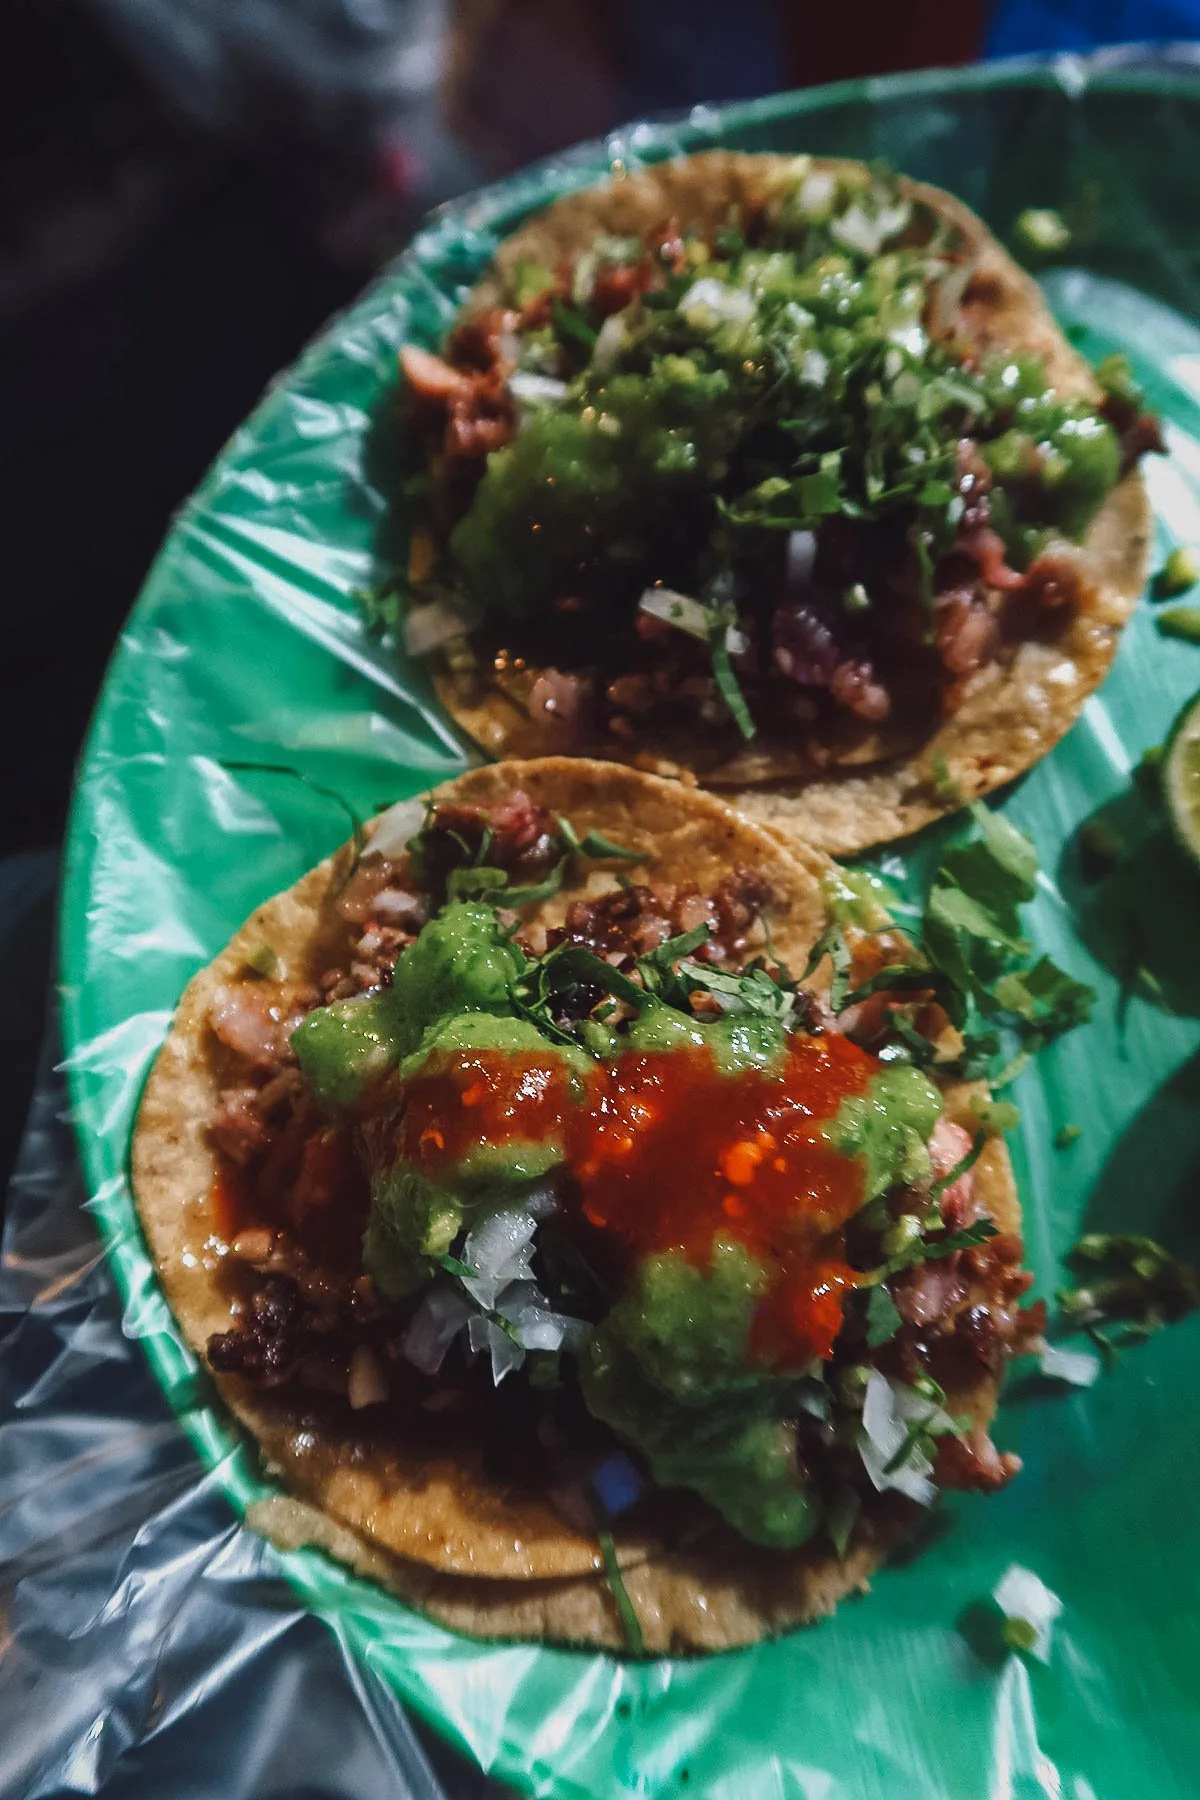 Cabeza tacos at Los Juanes